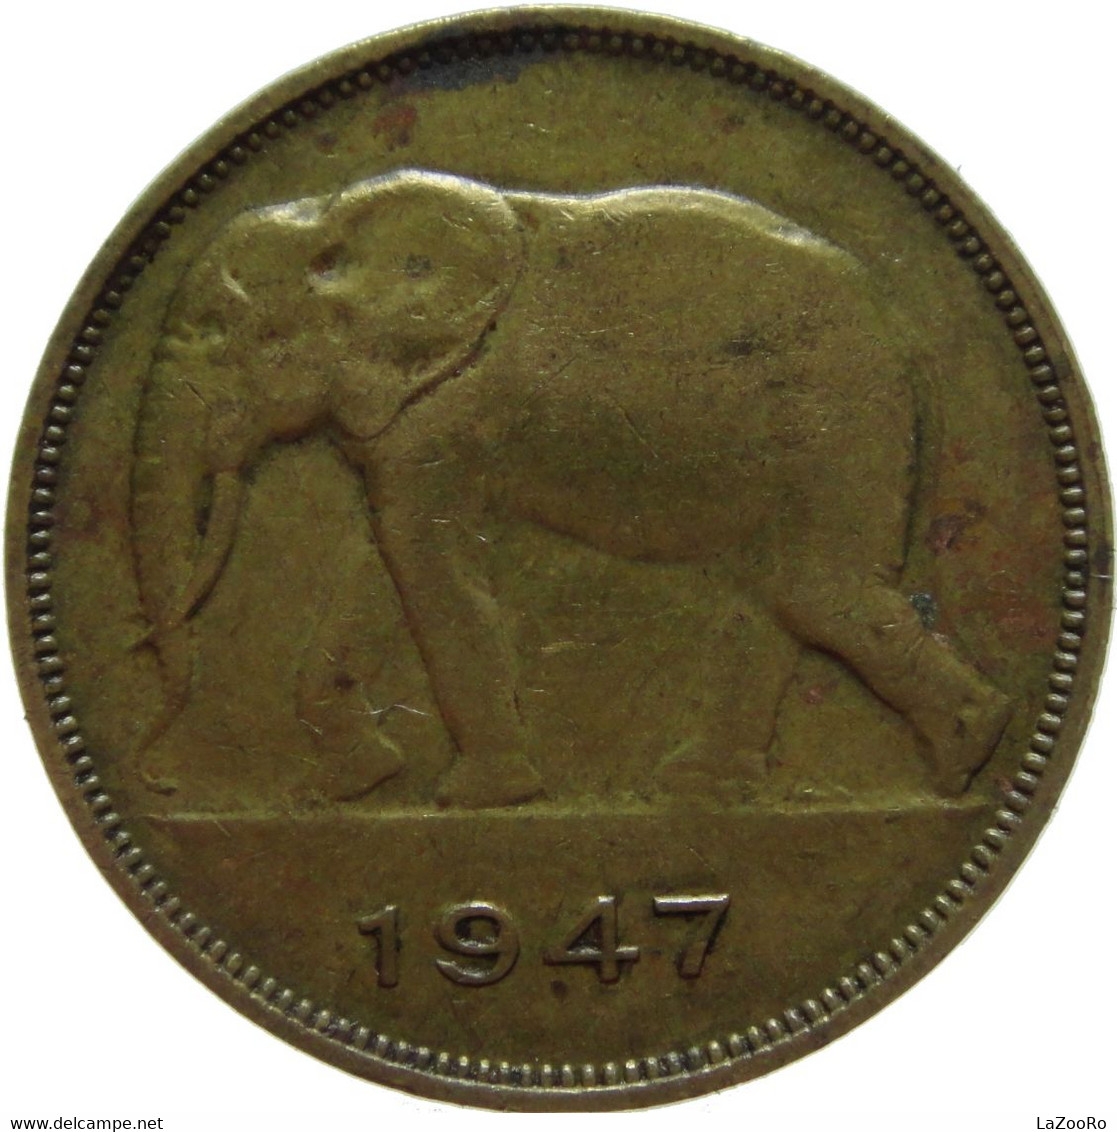 LaZooRo: Belgian Congo 5 Francs 1947 XF - 1945-1951: Regencia